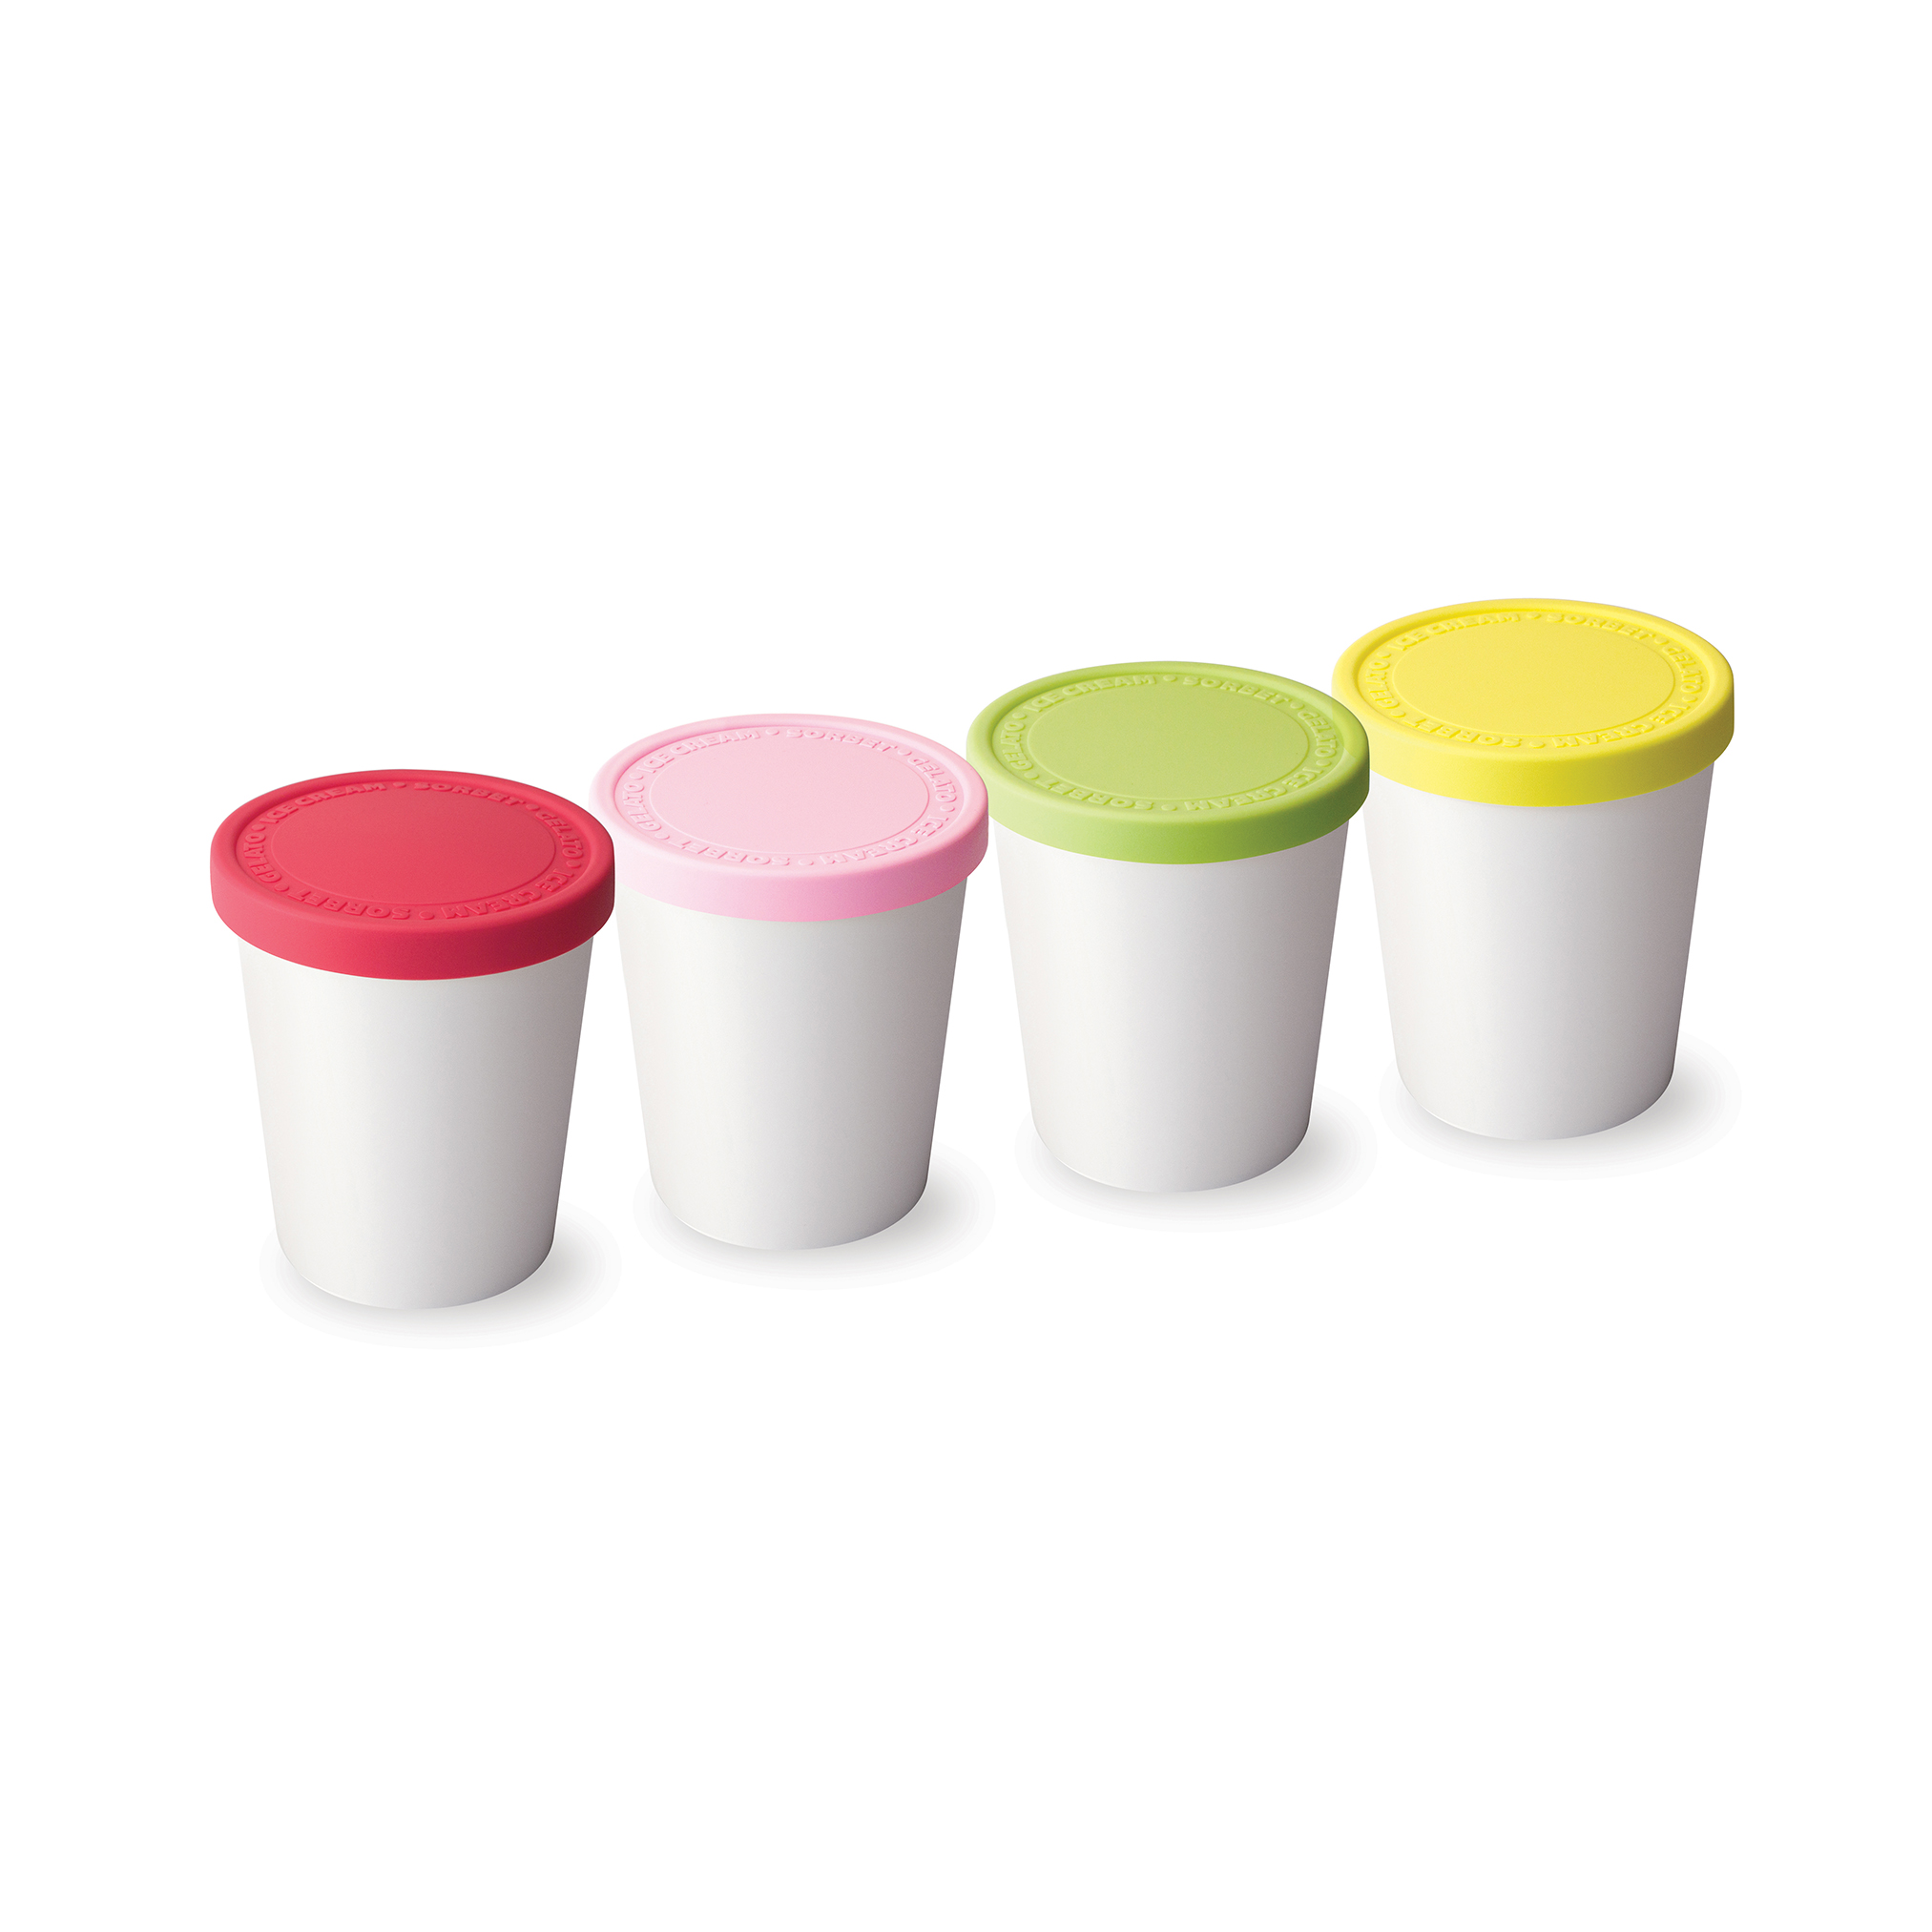 Set of 2 Premium Ice Cream Containers For Homemade Ice Cream 1.6